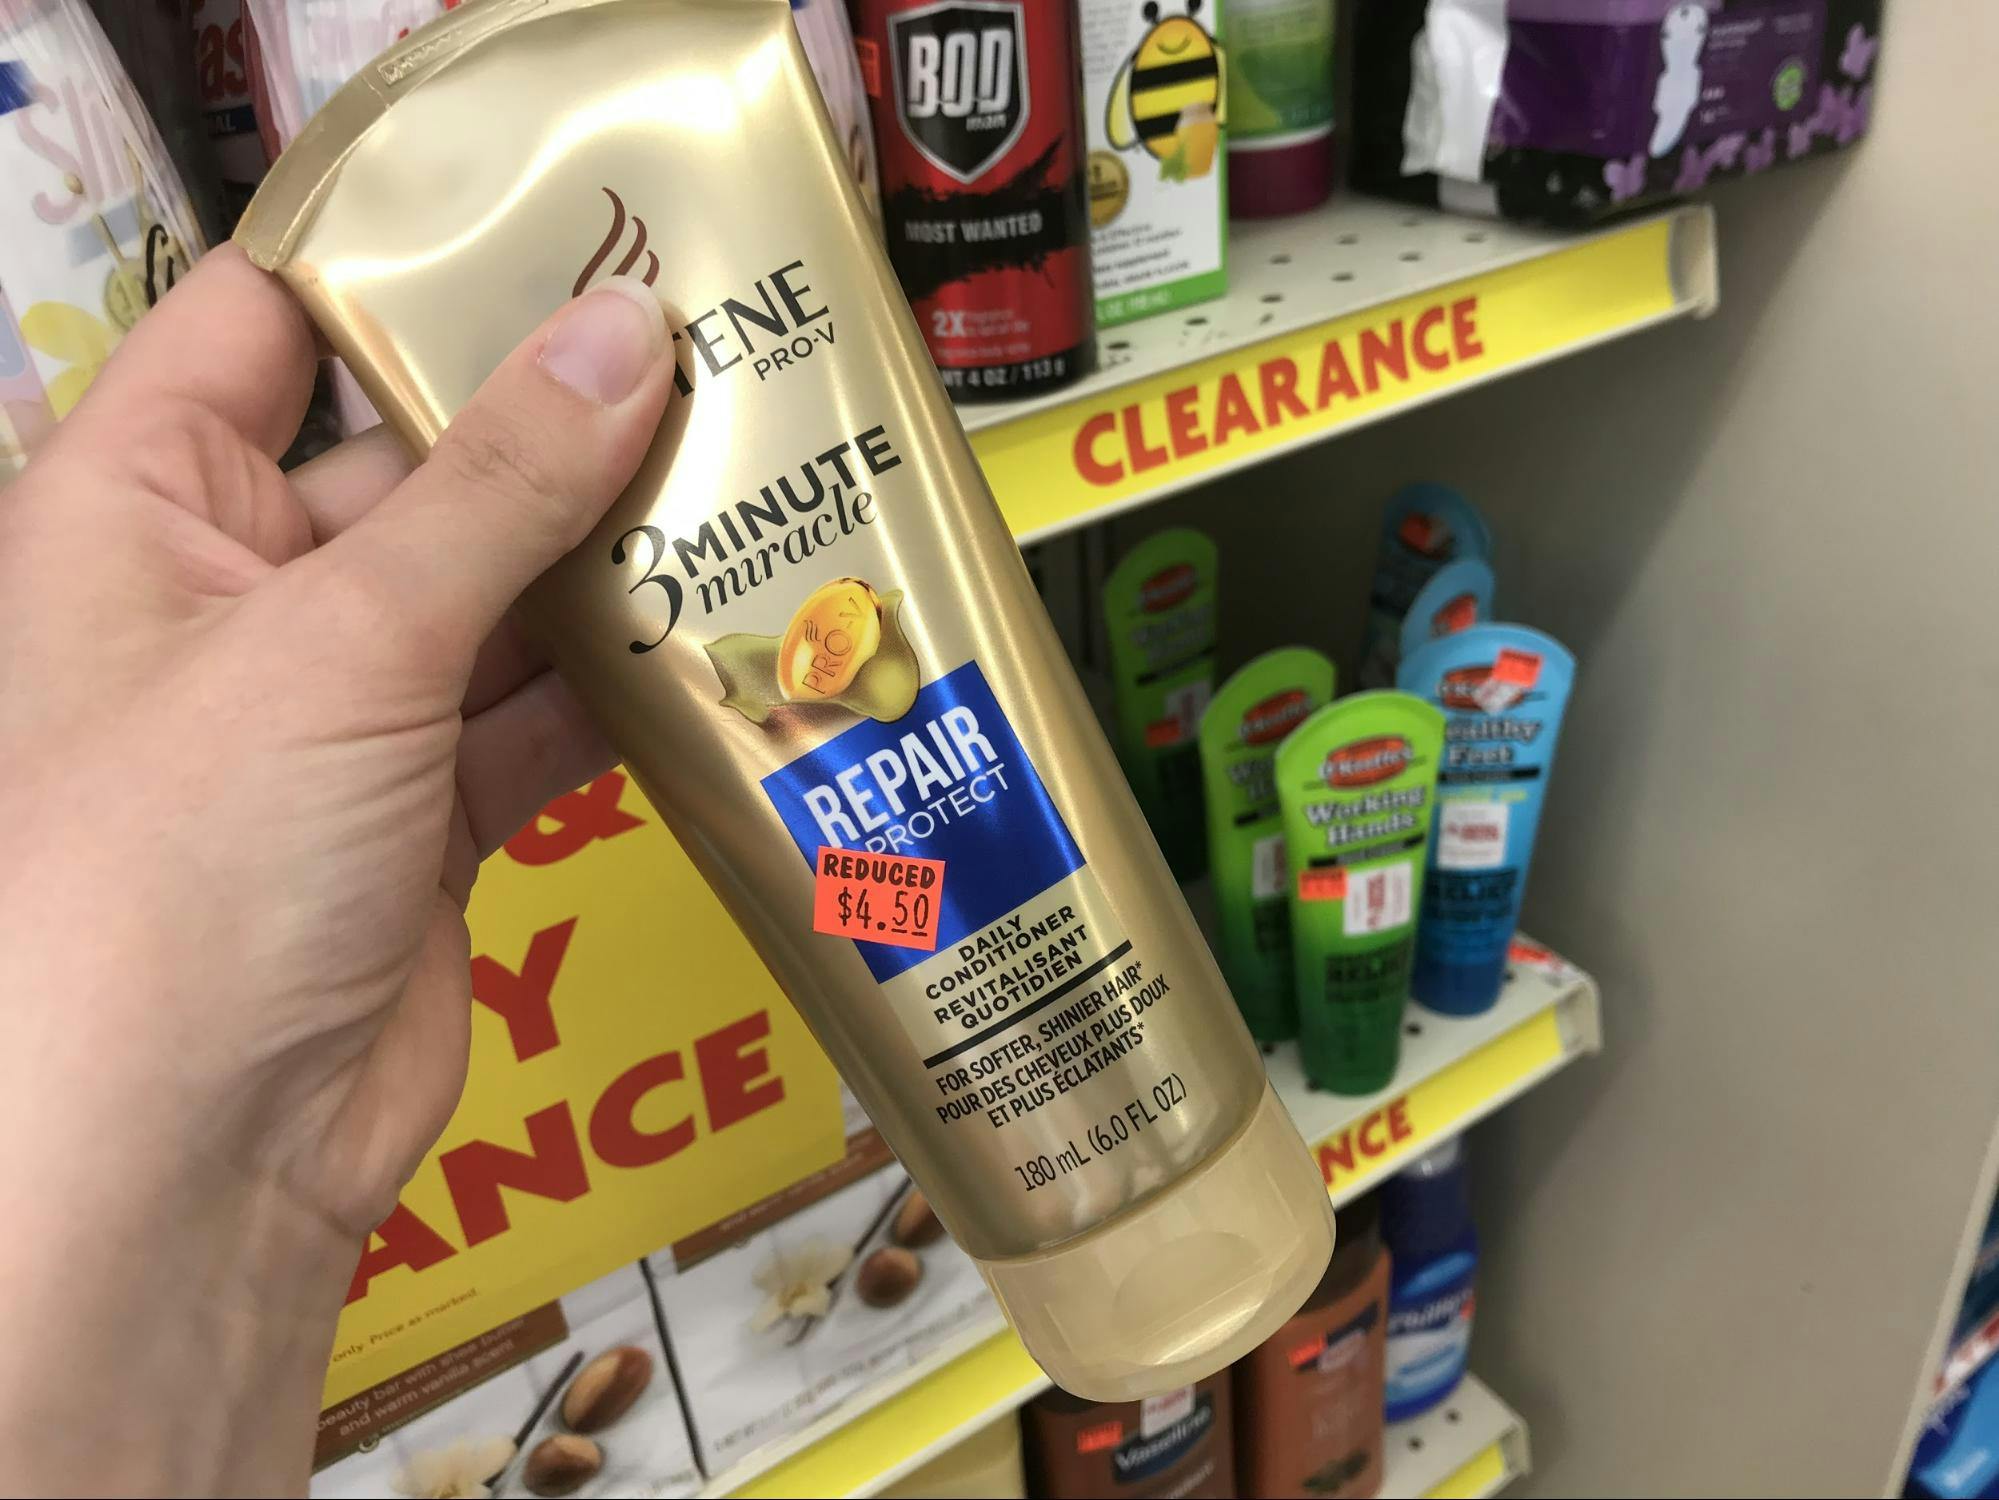 Pantene shampoo on clearance with an orange tag